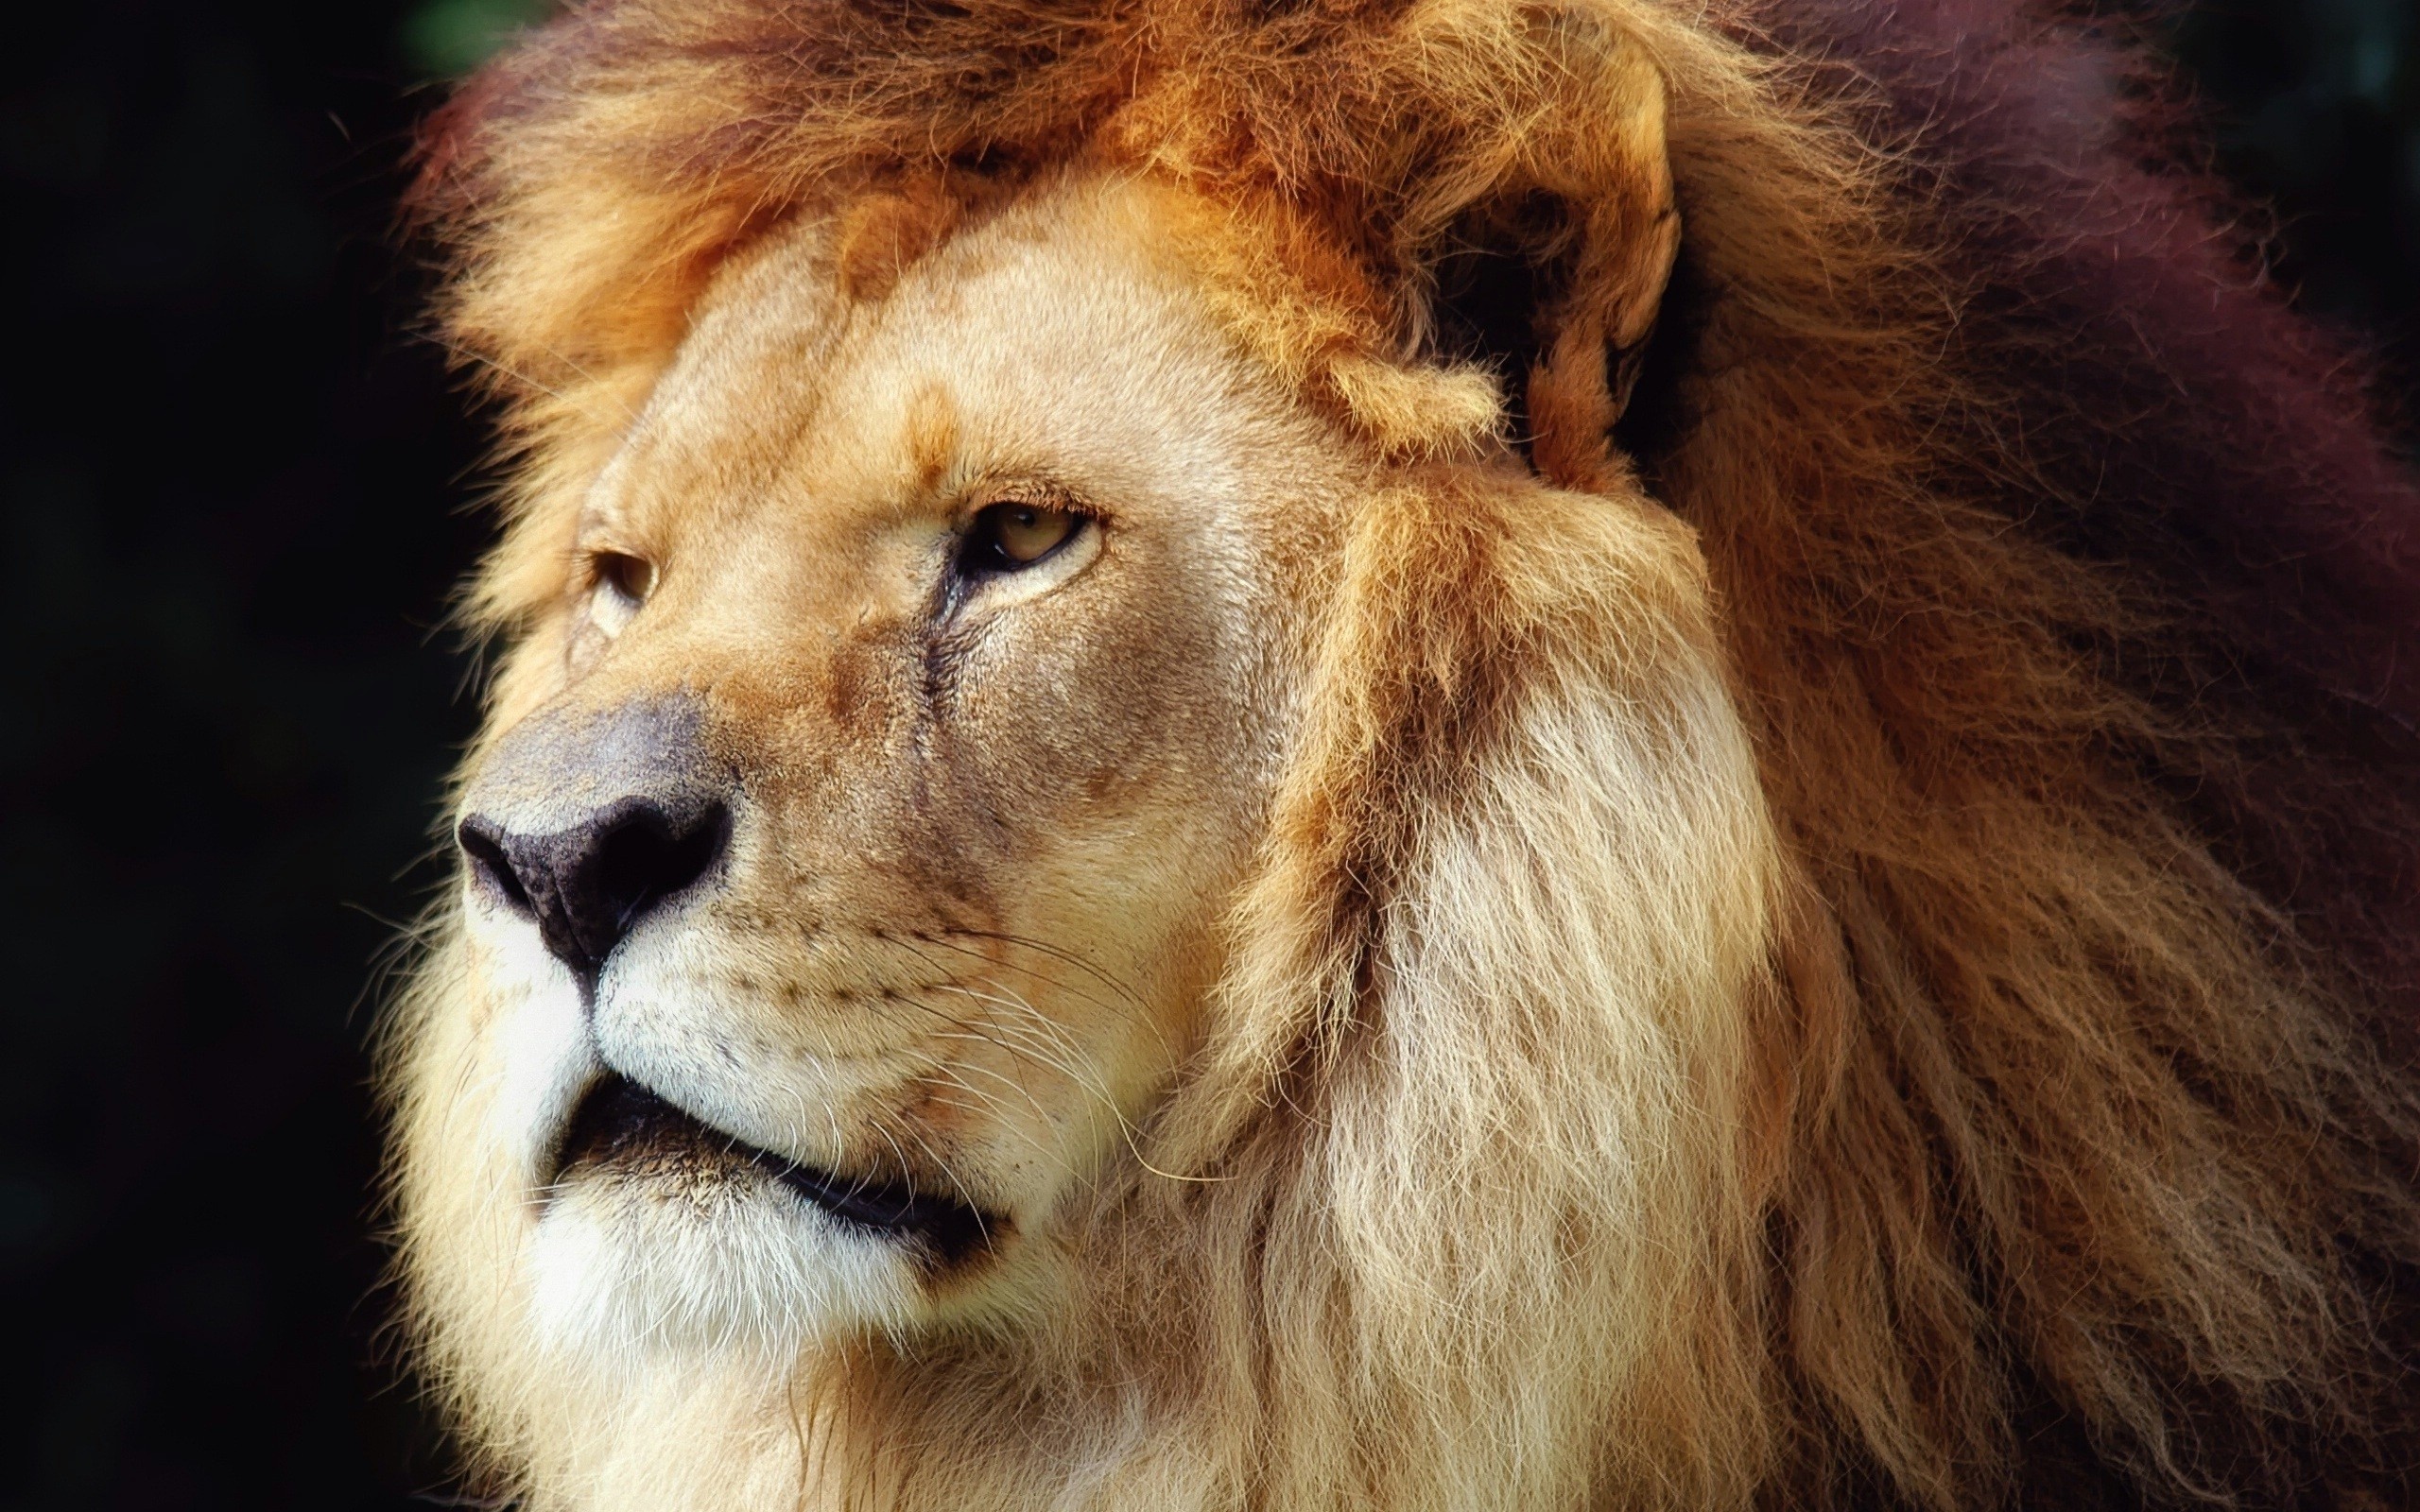 animals, lions, faces - desktop wallpaper